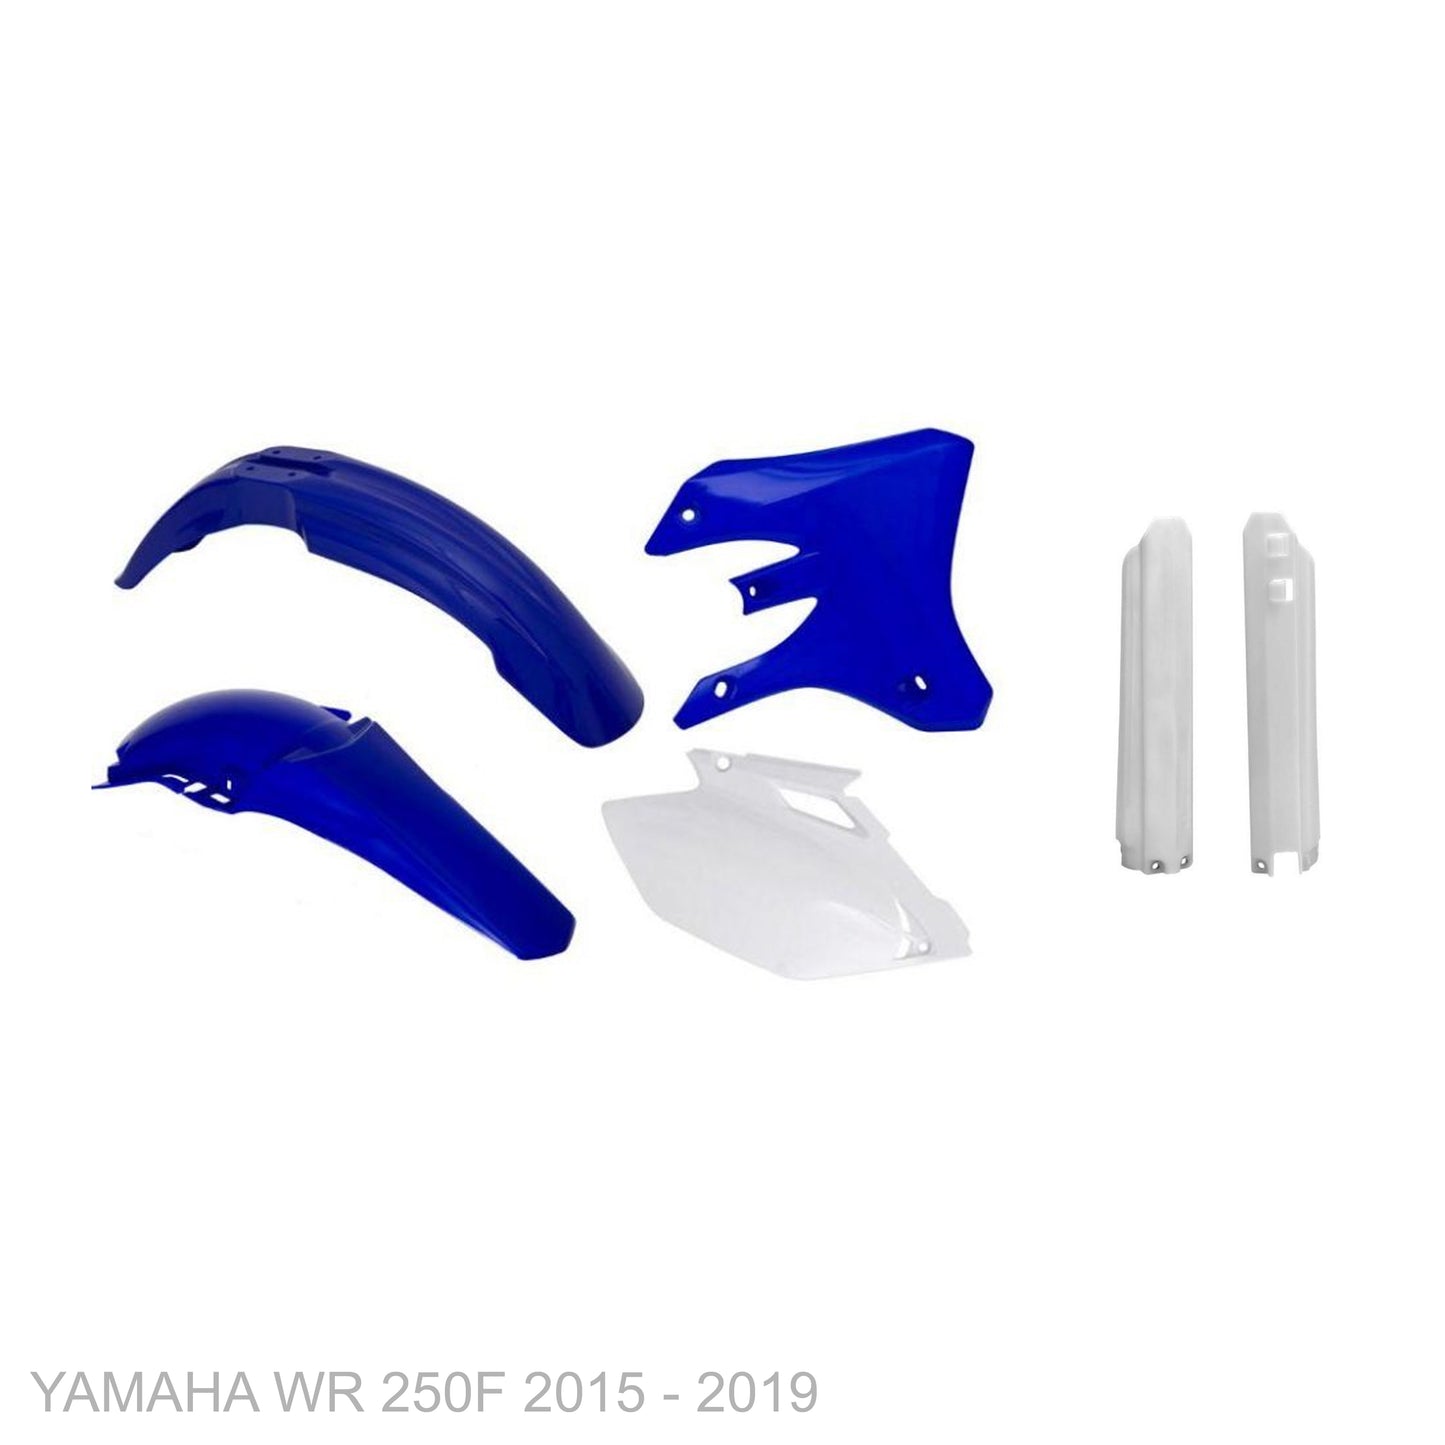 YAMAHA WR 250F 2015 - 2019 Start From Scratch Graphics Kits